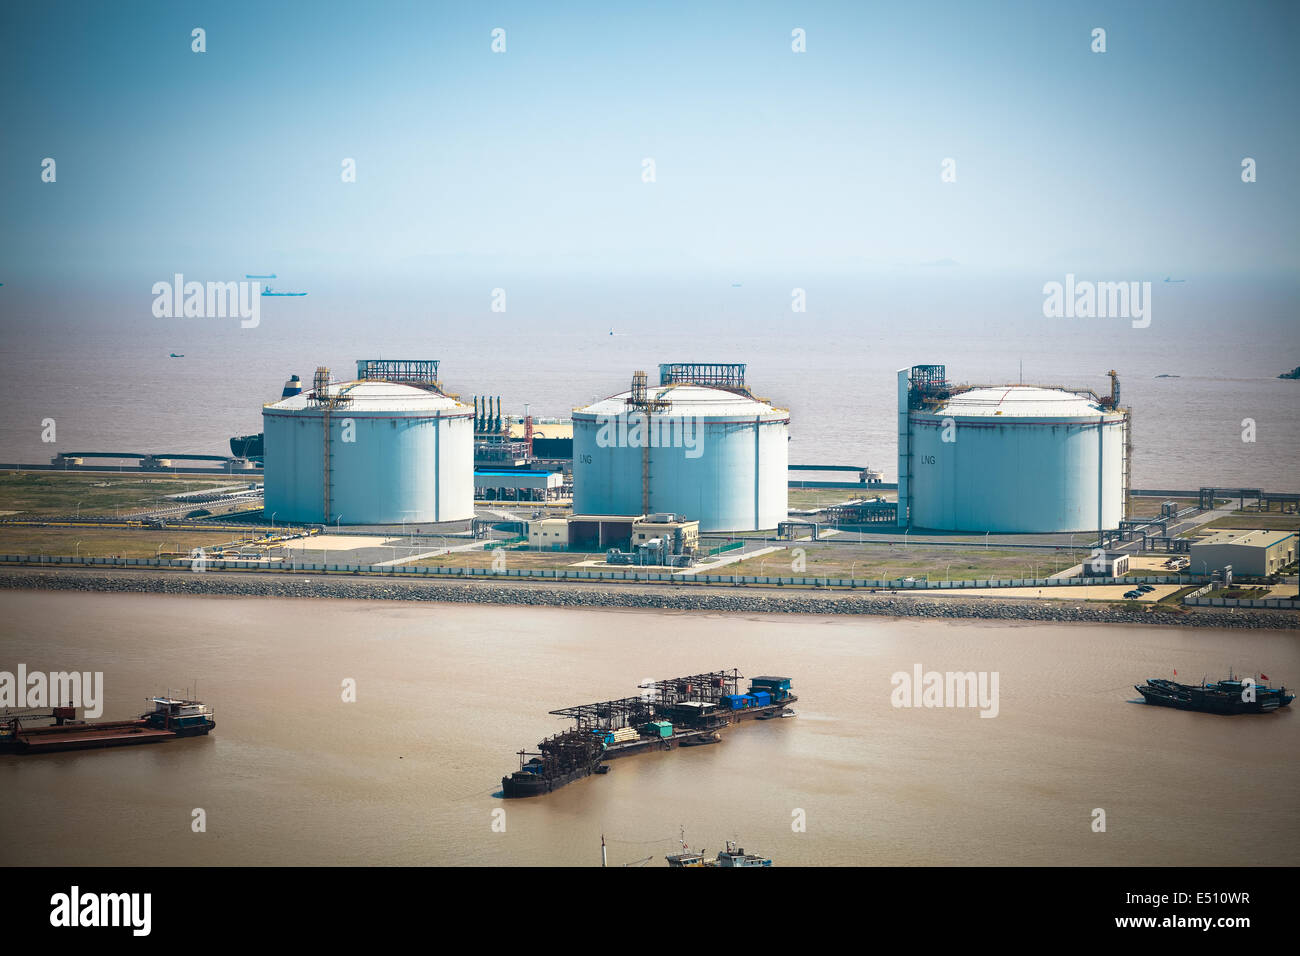 LNG tanks at the port Stock Photo